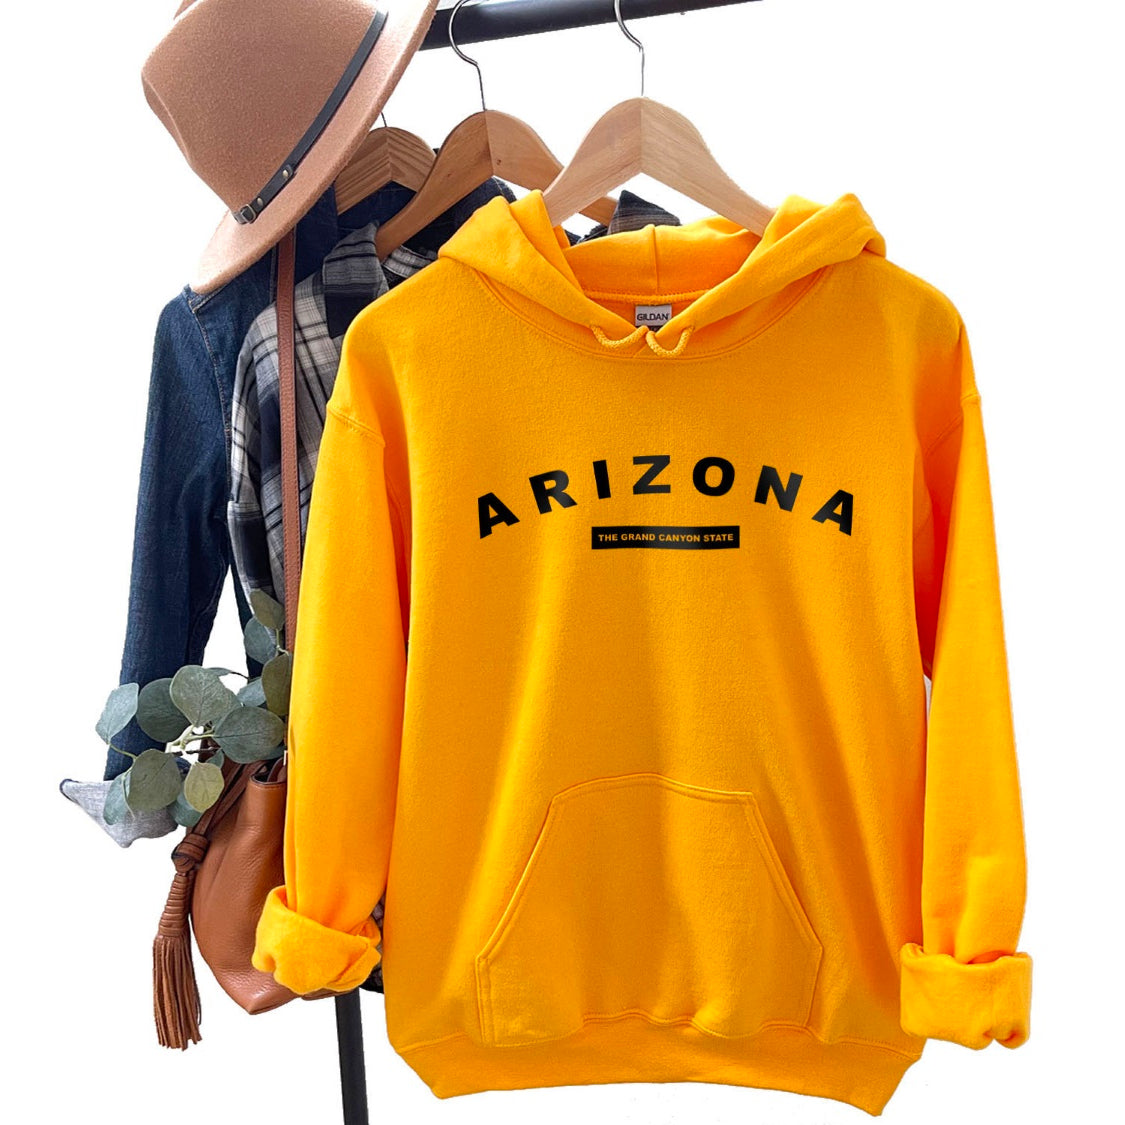 Arizona The Grand Canyon State Hoodie - United States Name & Slogan Minimal Design Printed Hoodie